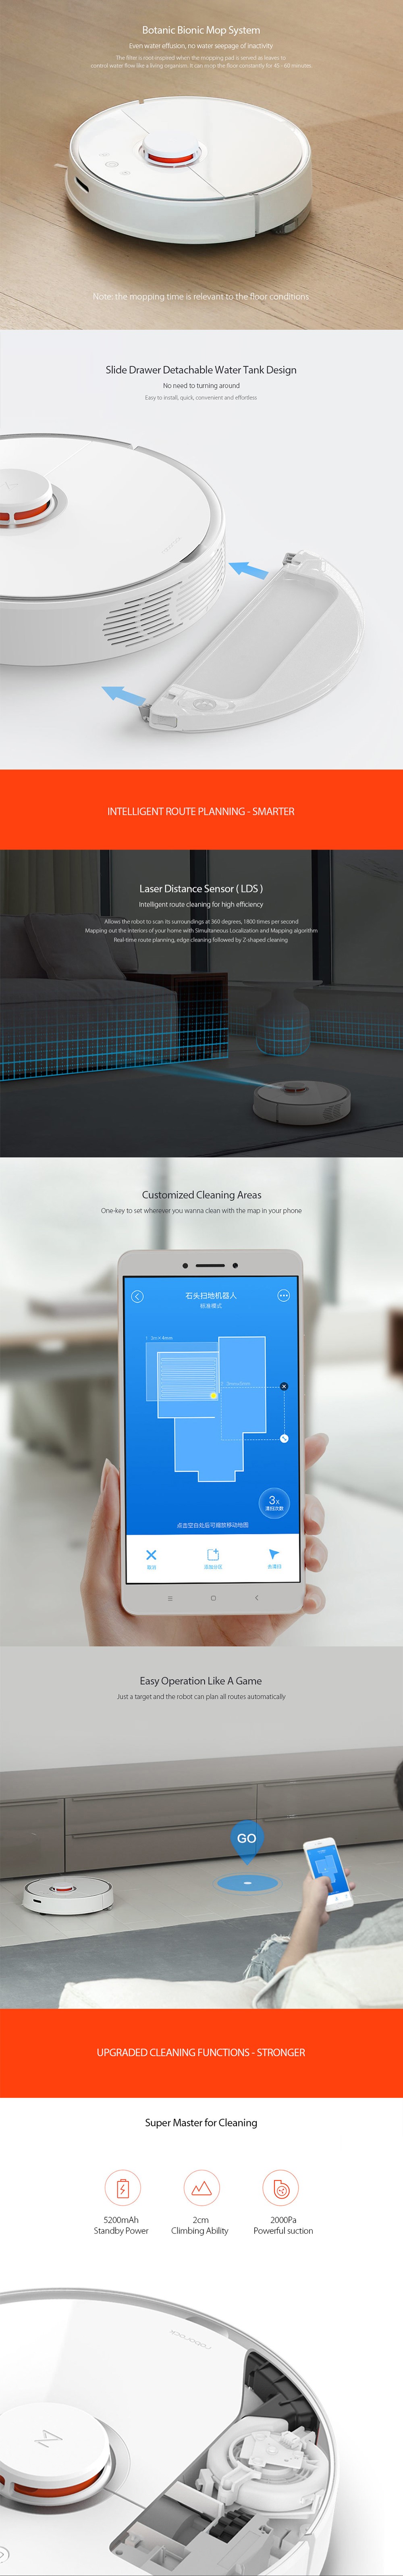 Xiaomi Mi Roborock Robot Vacuum Cleaner 2nd Generation ...